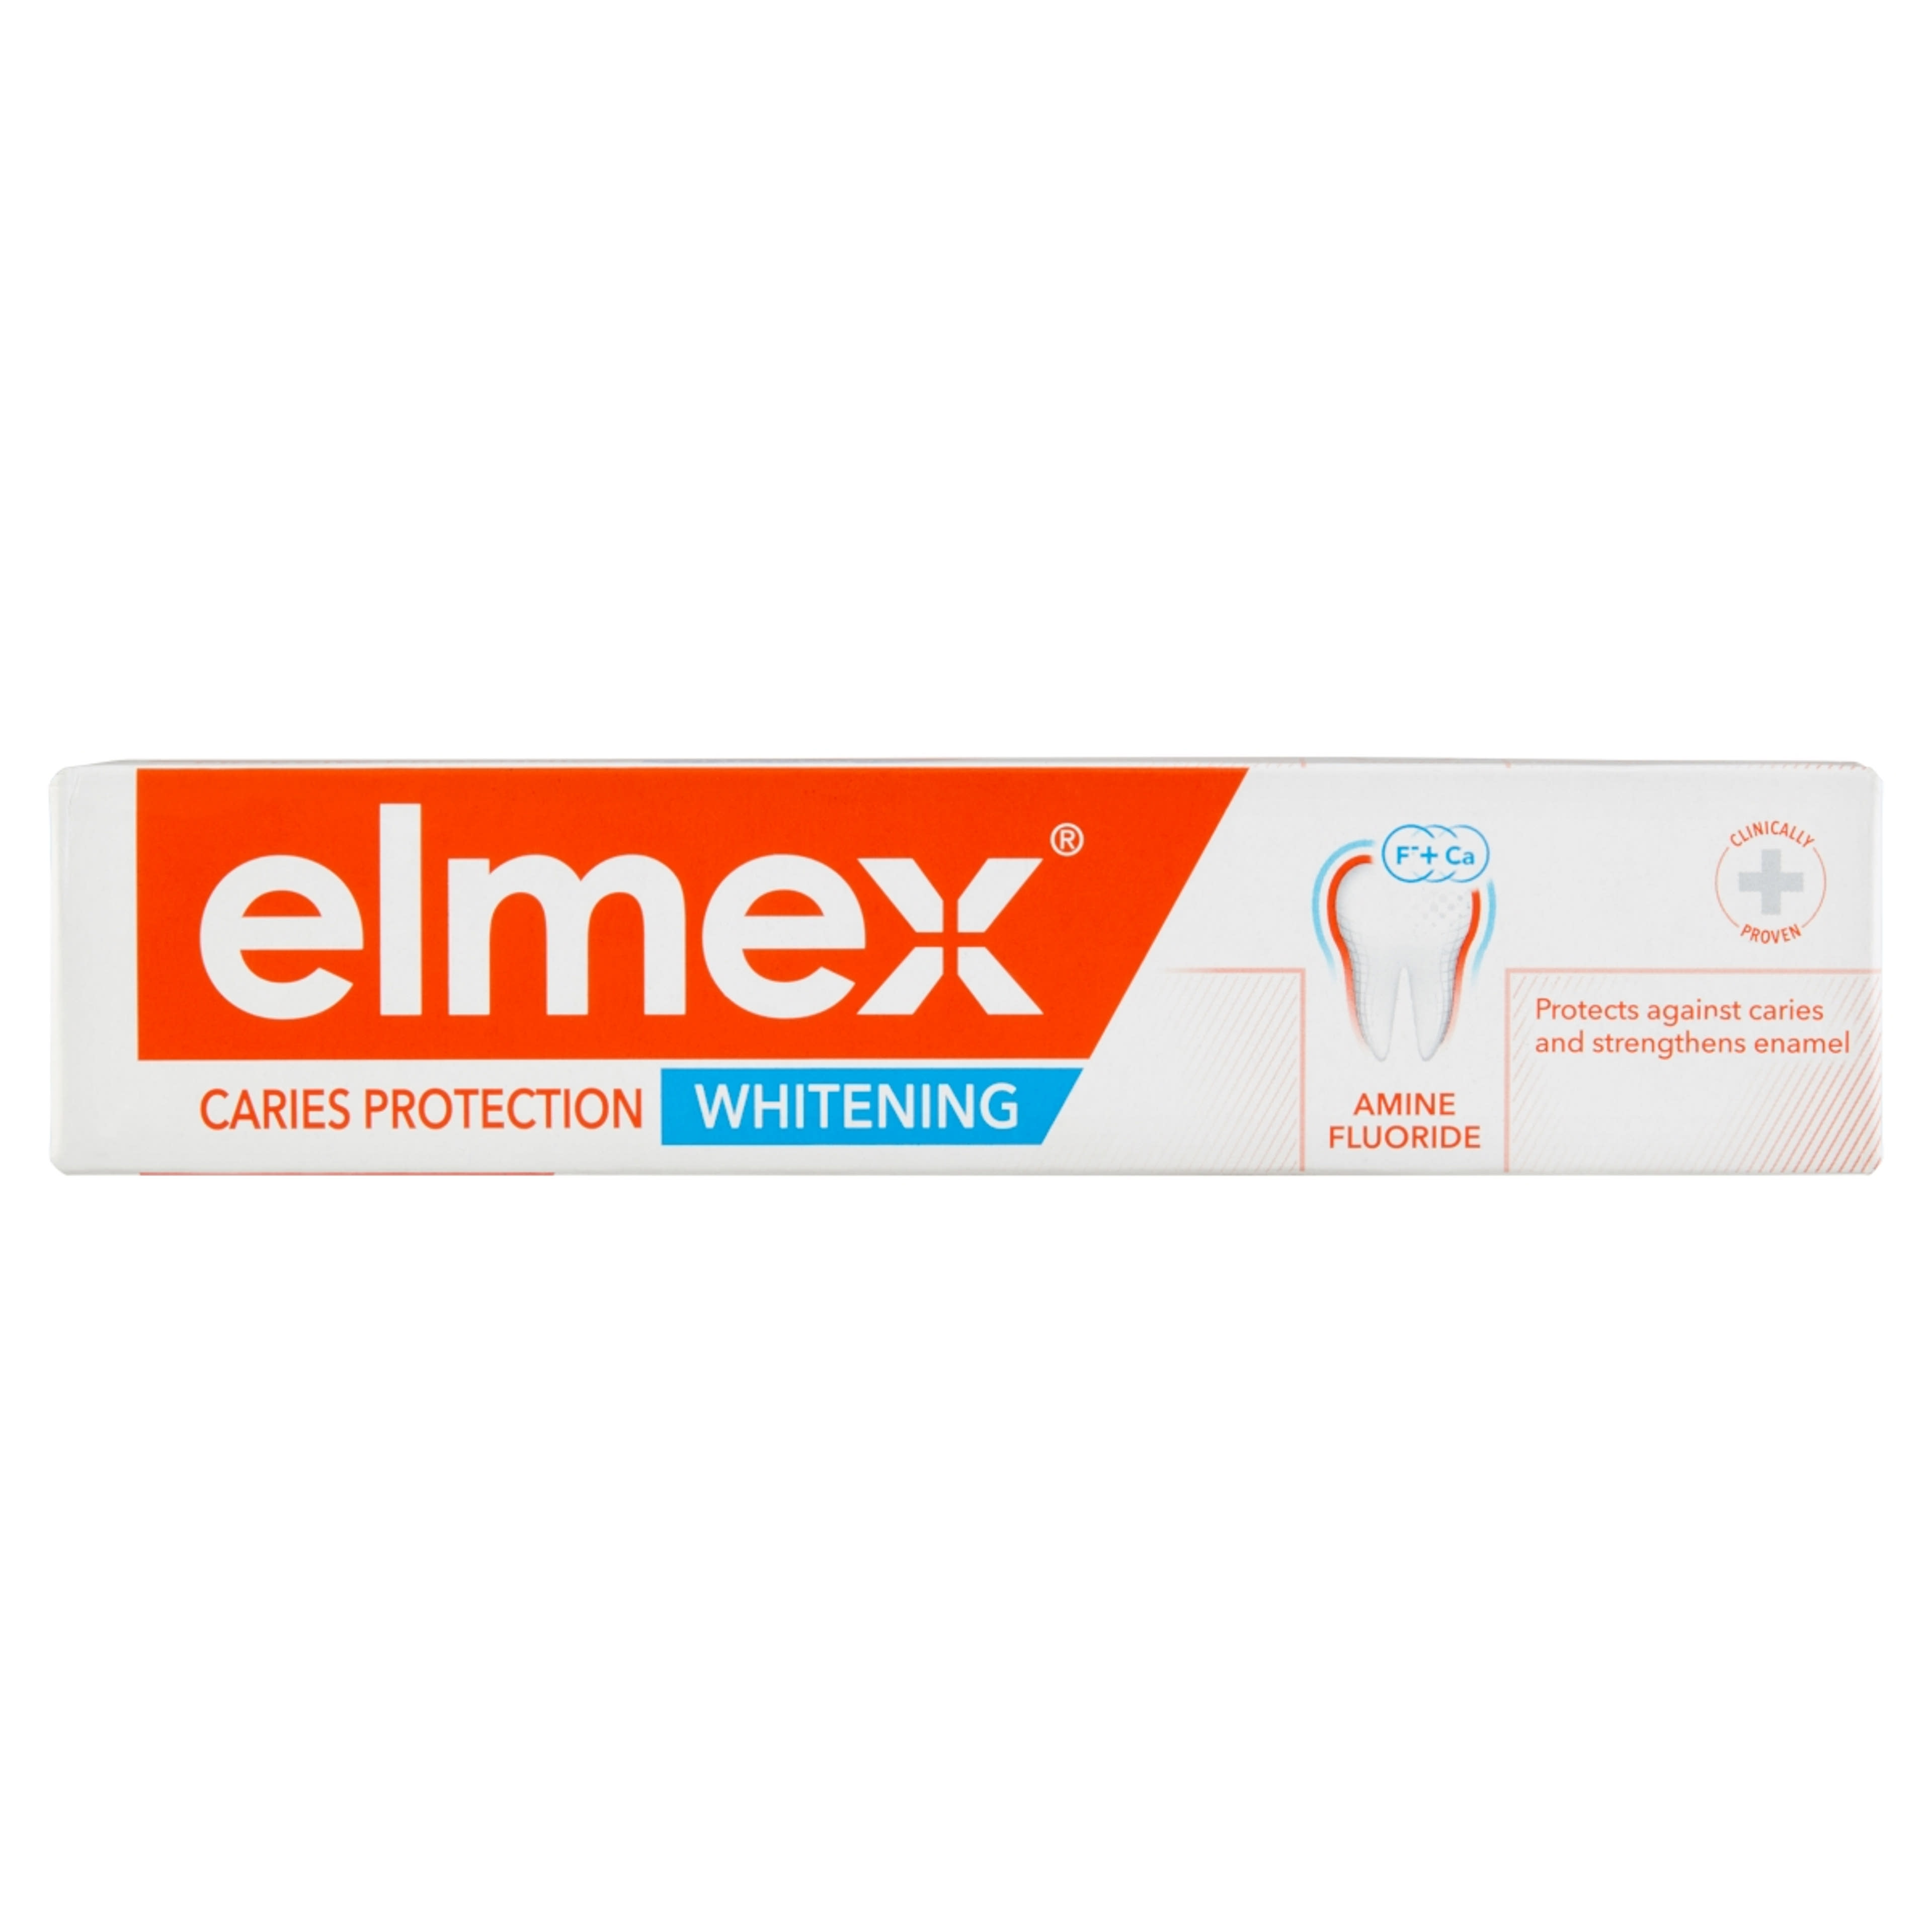 Elmex fogkrém caries protection whitening - 75 ml-1